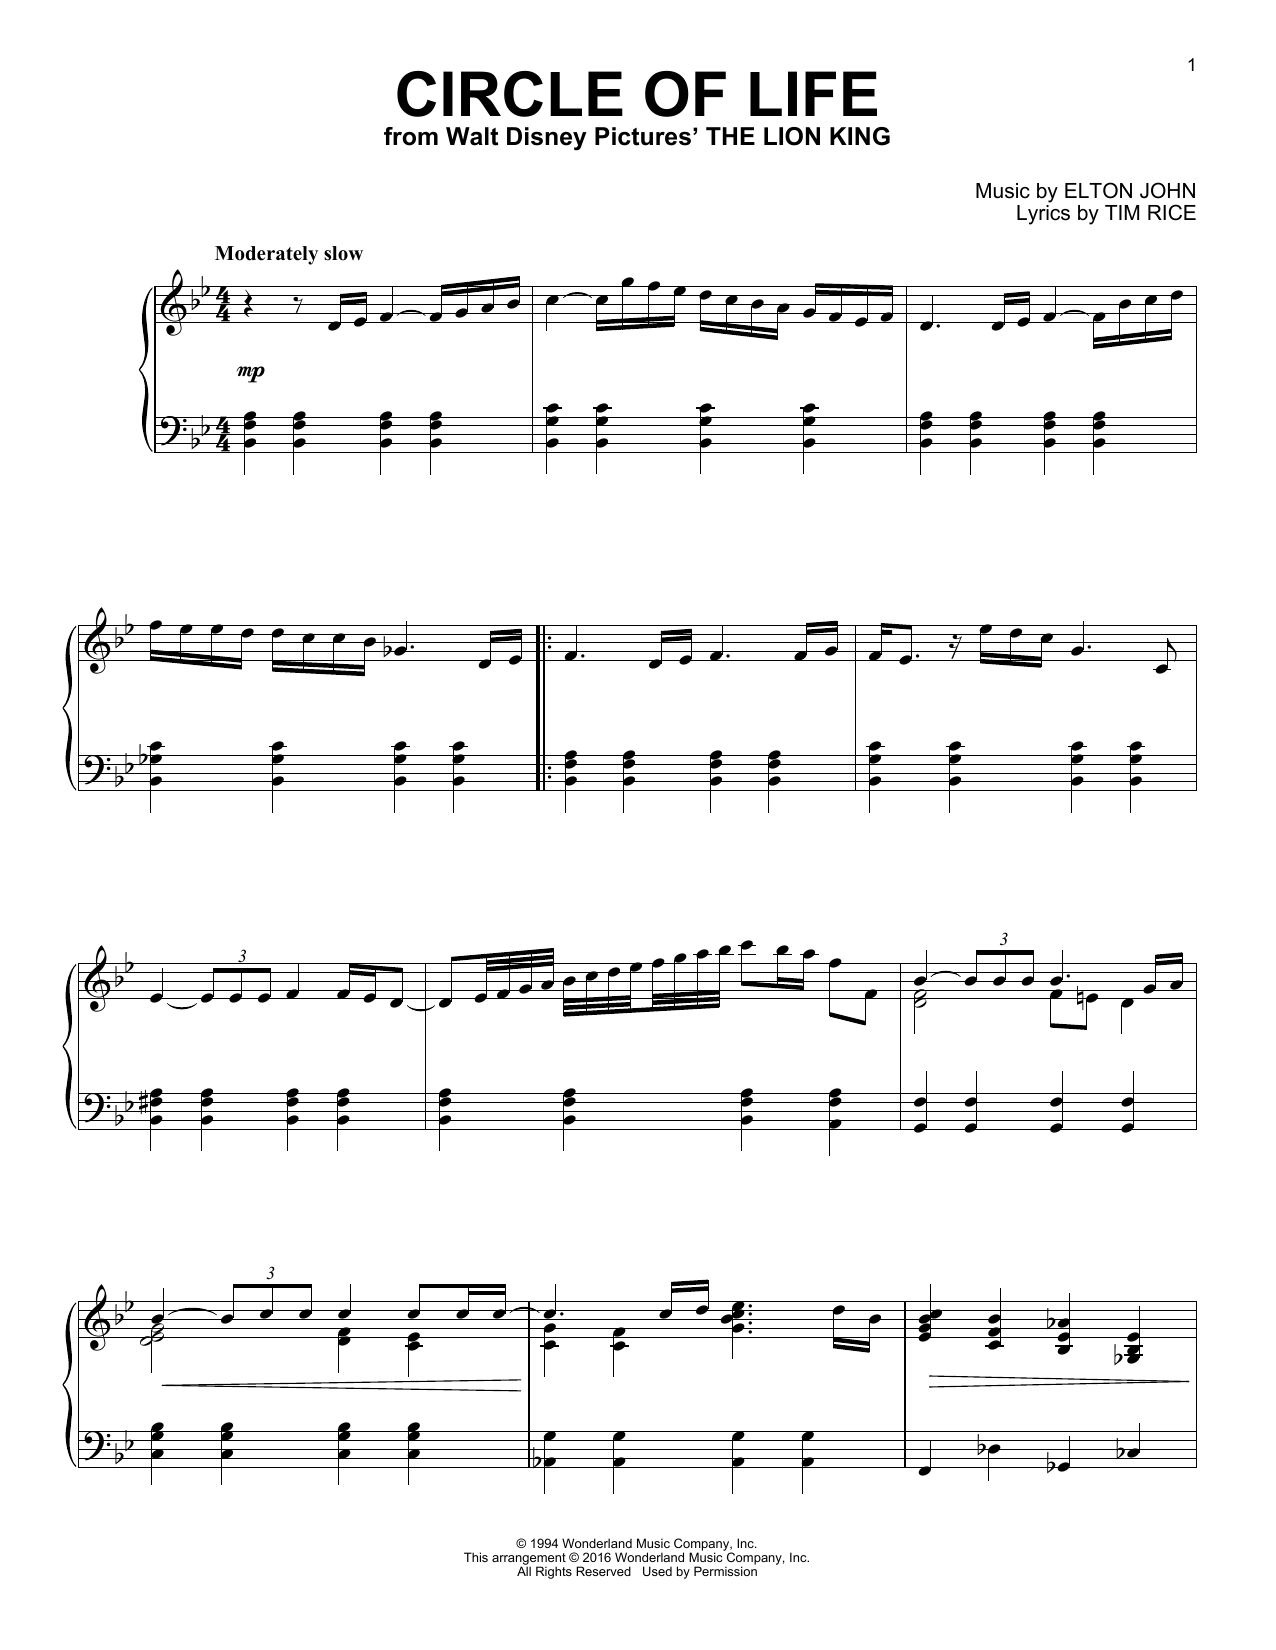 Elton John Circle Of Life [Jazz version] (from Disney's The Lion King) Sheet Music Notes & Chords for Piano - Download or Print PDF